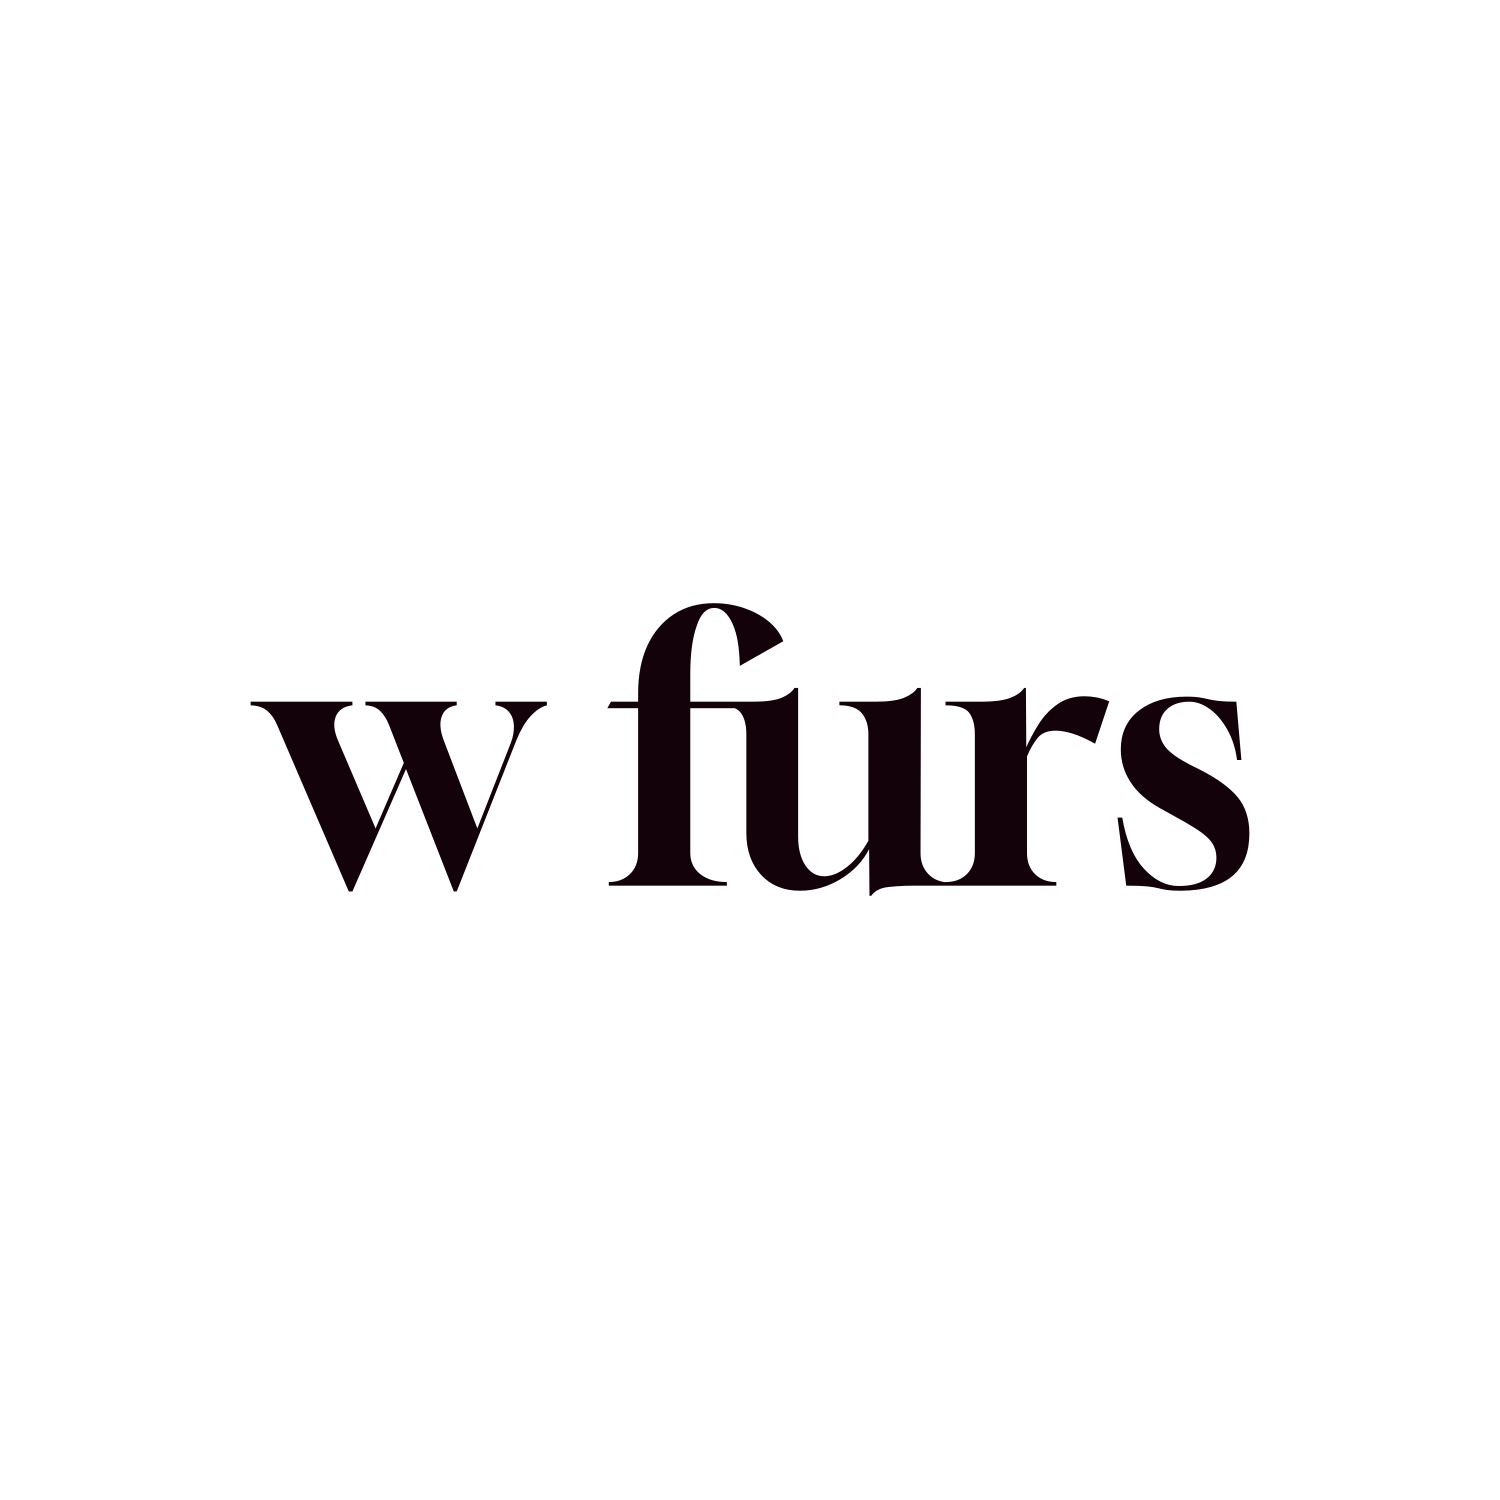 wfurs logo